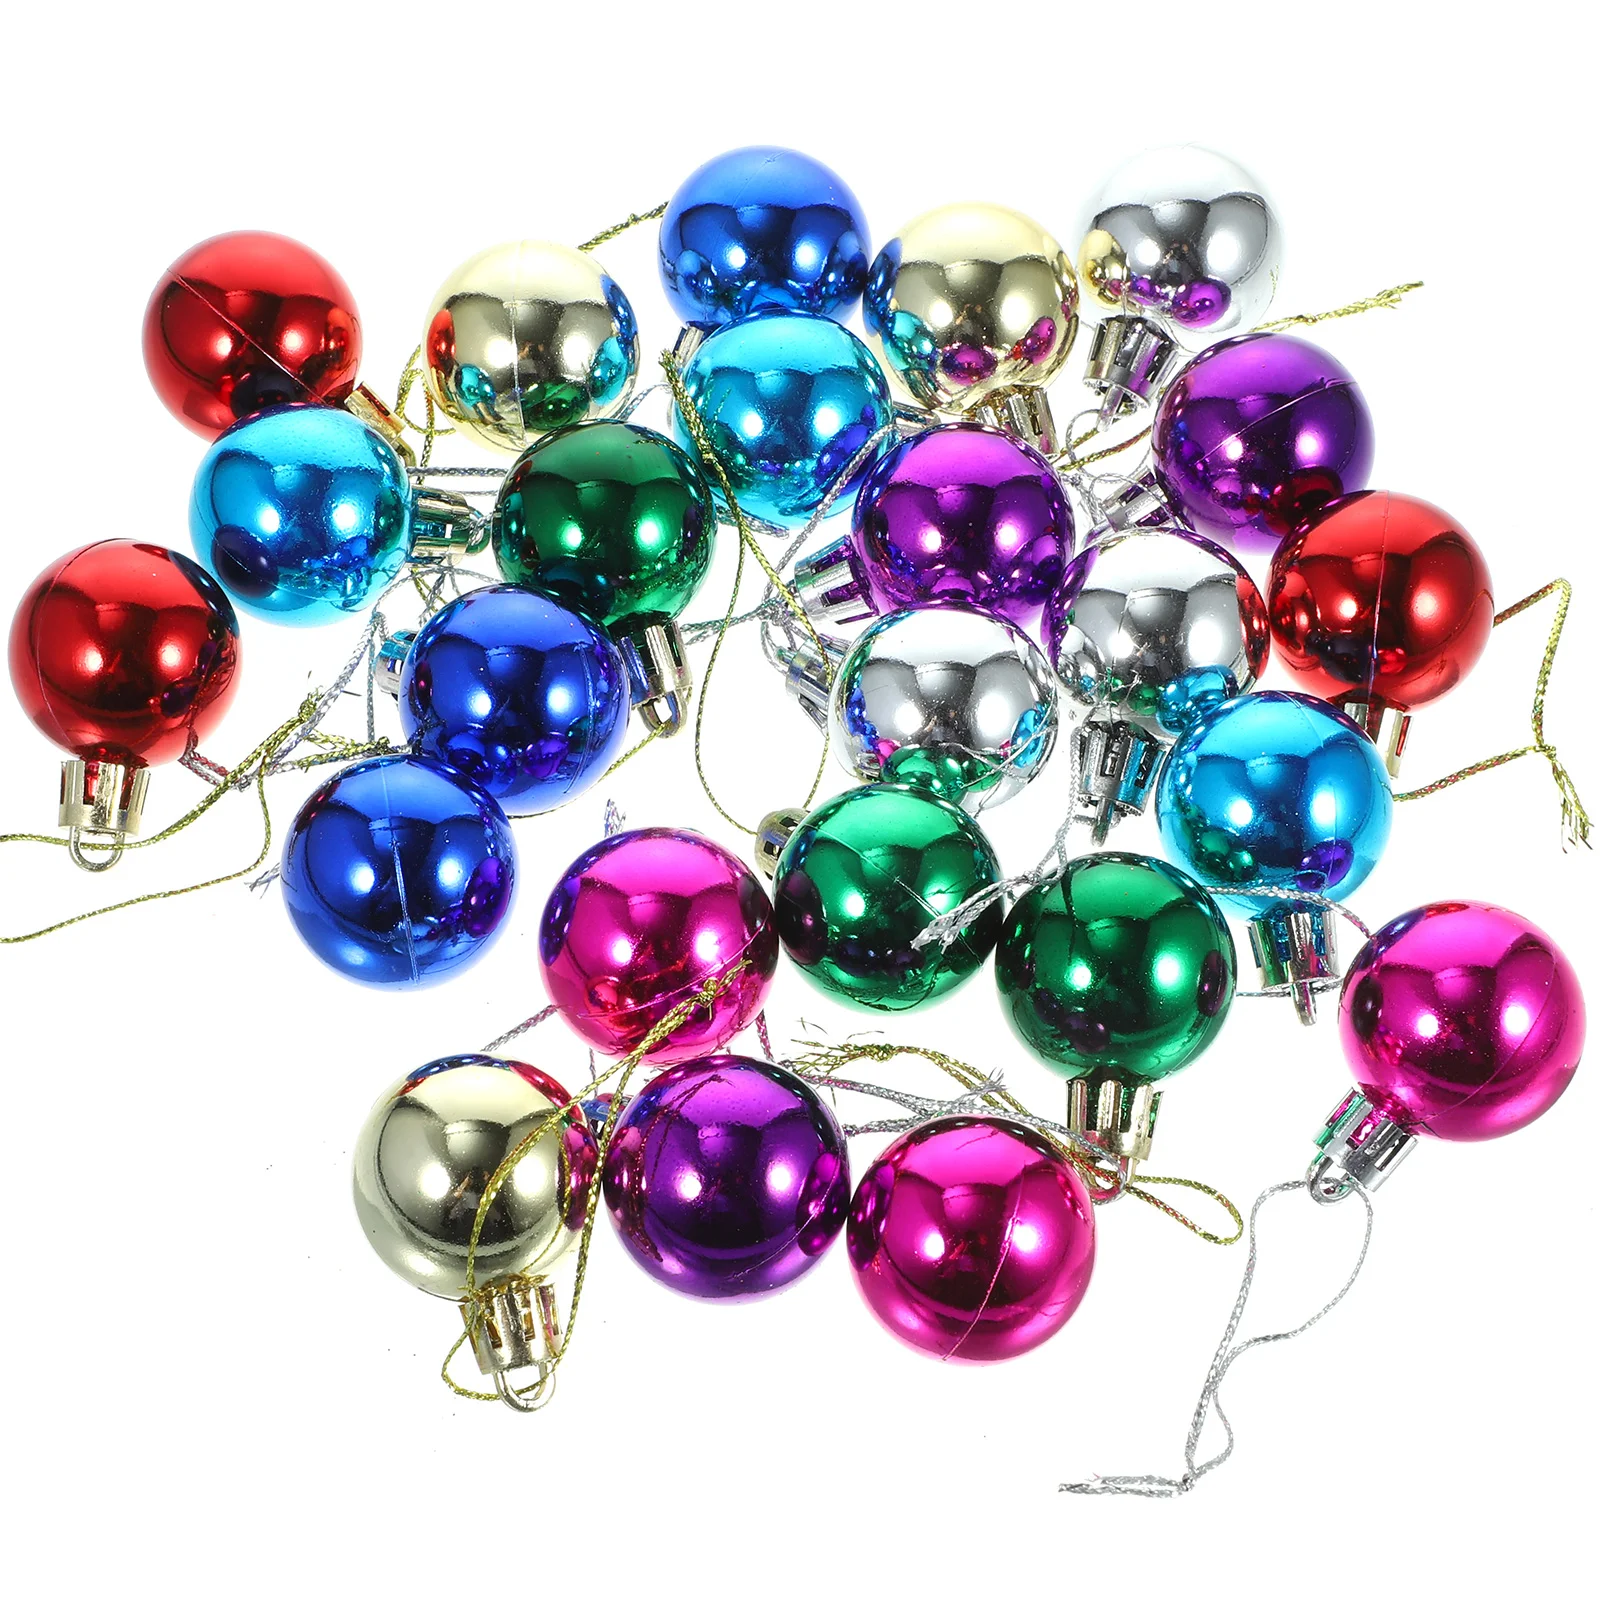 

24pcs Christmas Tree Pendants Lanyard Hanging Ball Shatterproof Colorful Balls